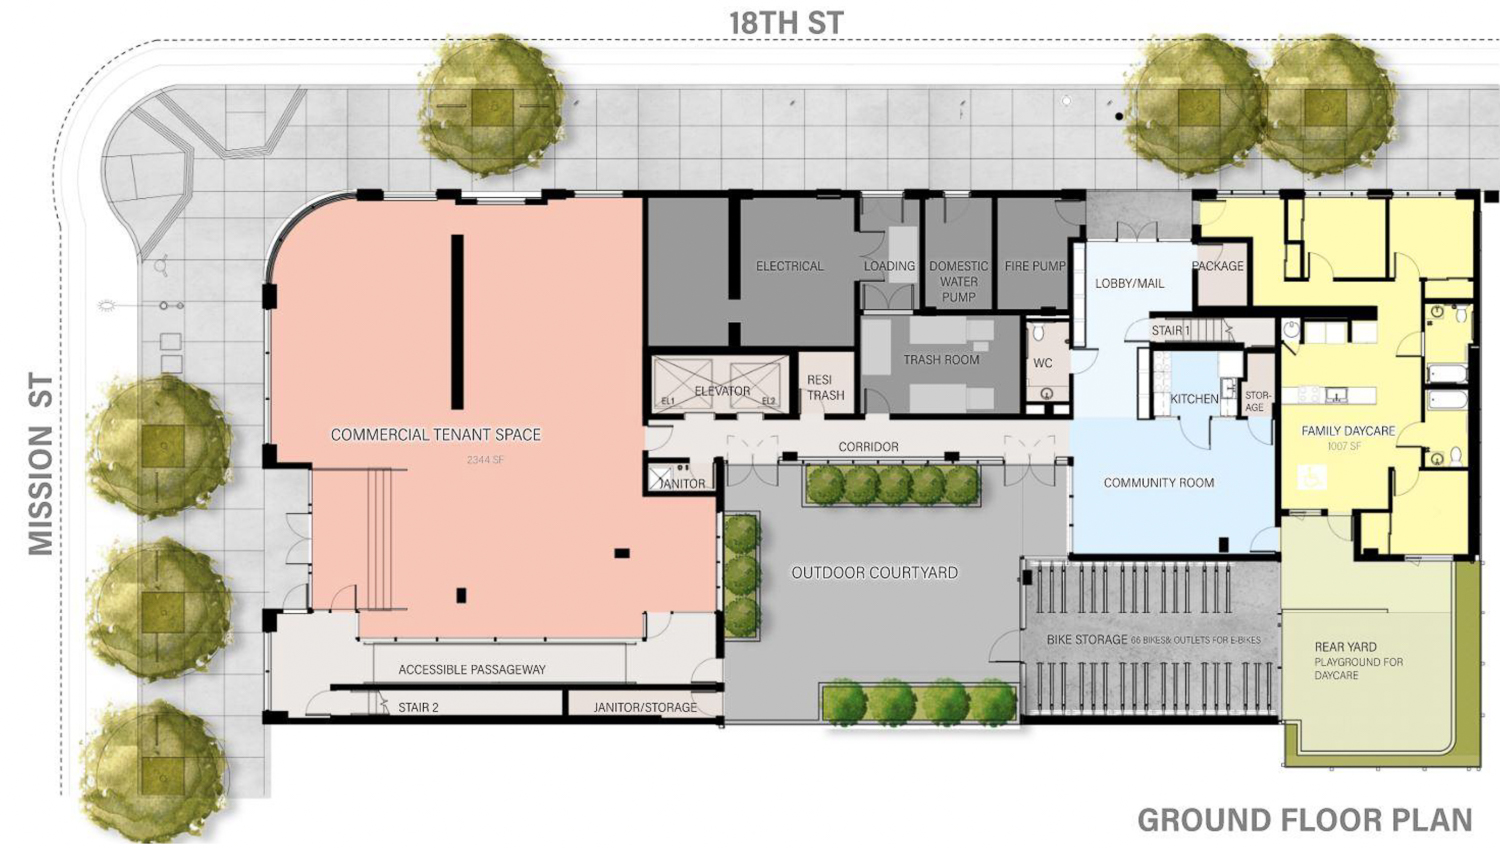 2205 Mission Street ground-level floor plan, illustration via MEDA